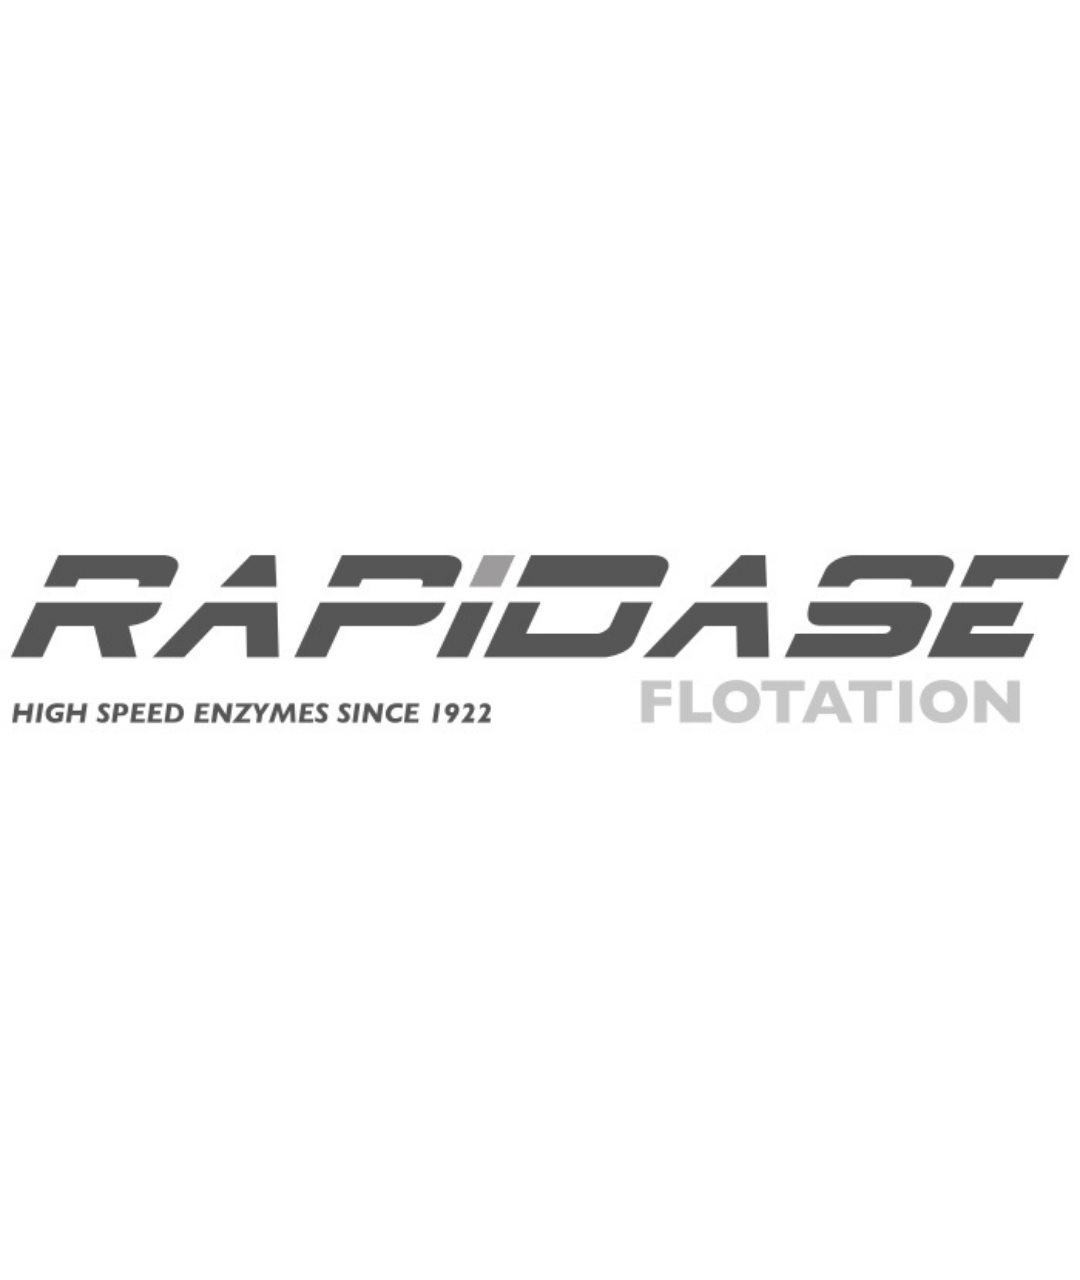 Rapidase Flotation